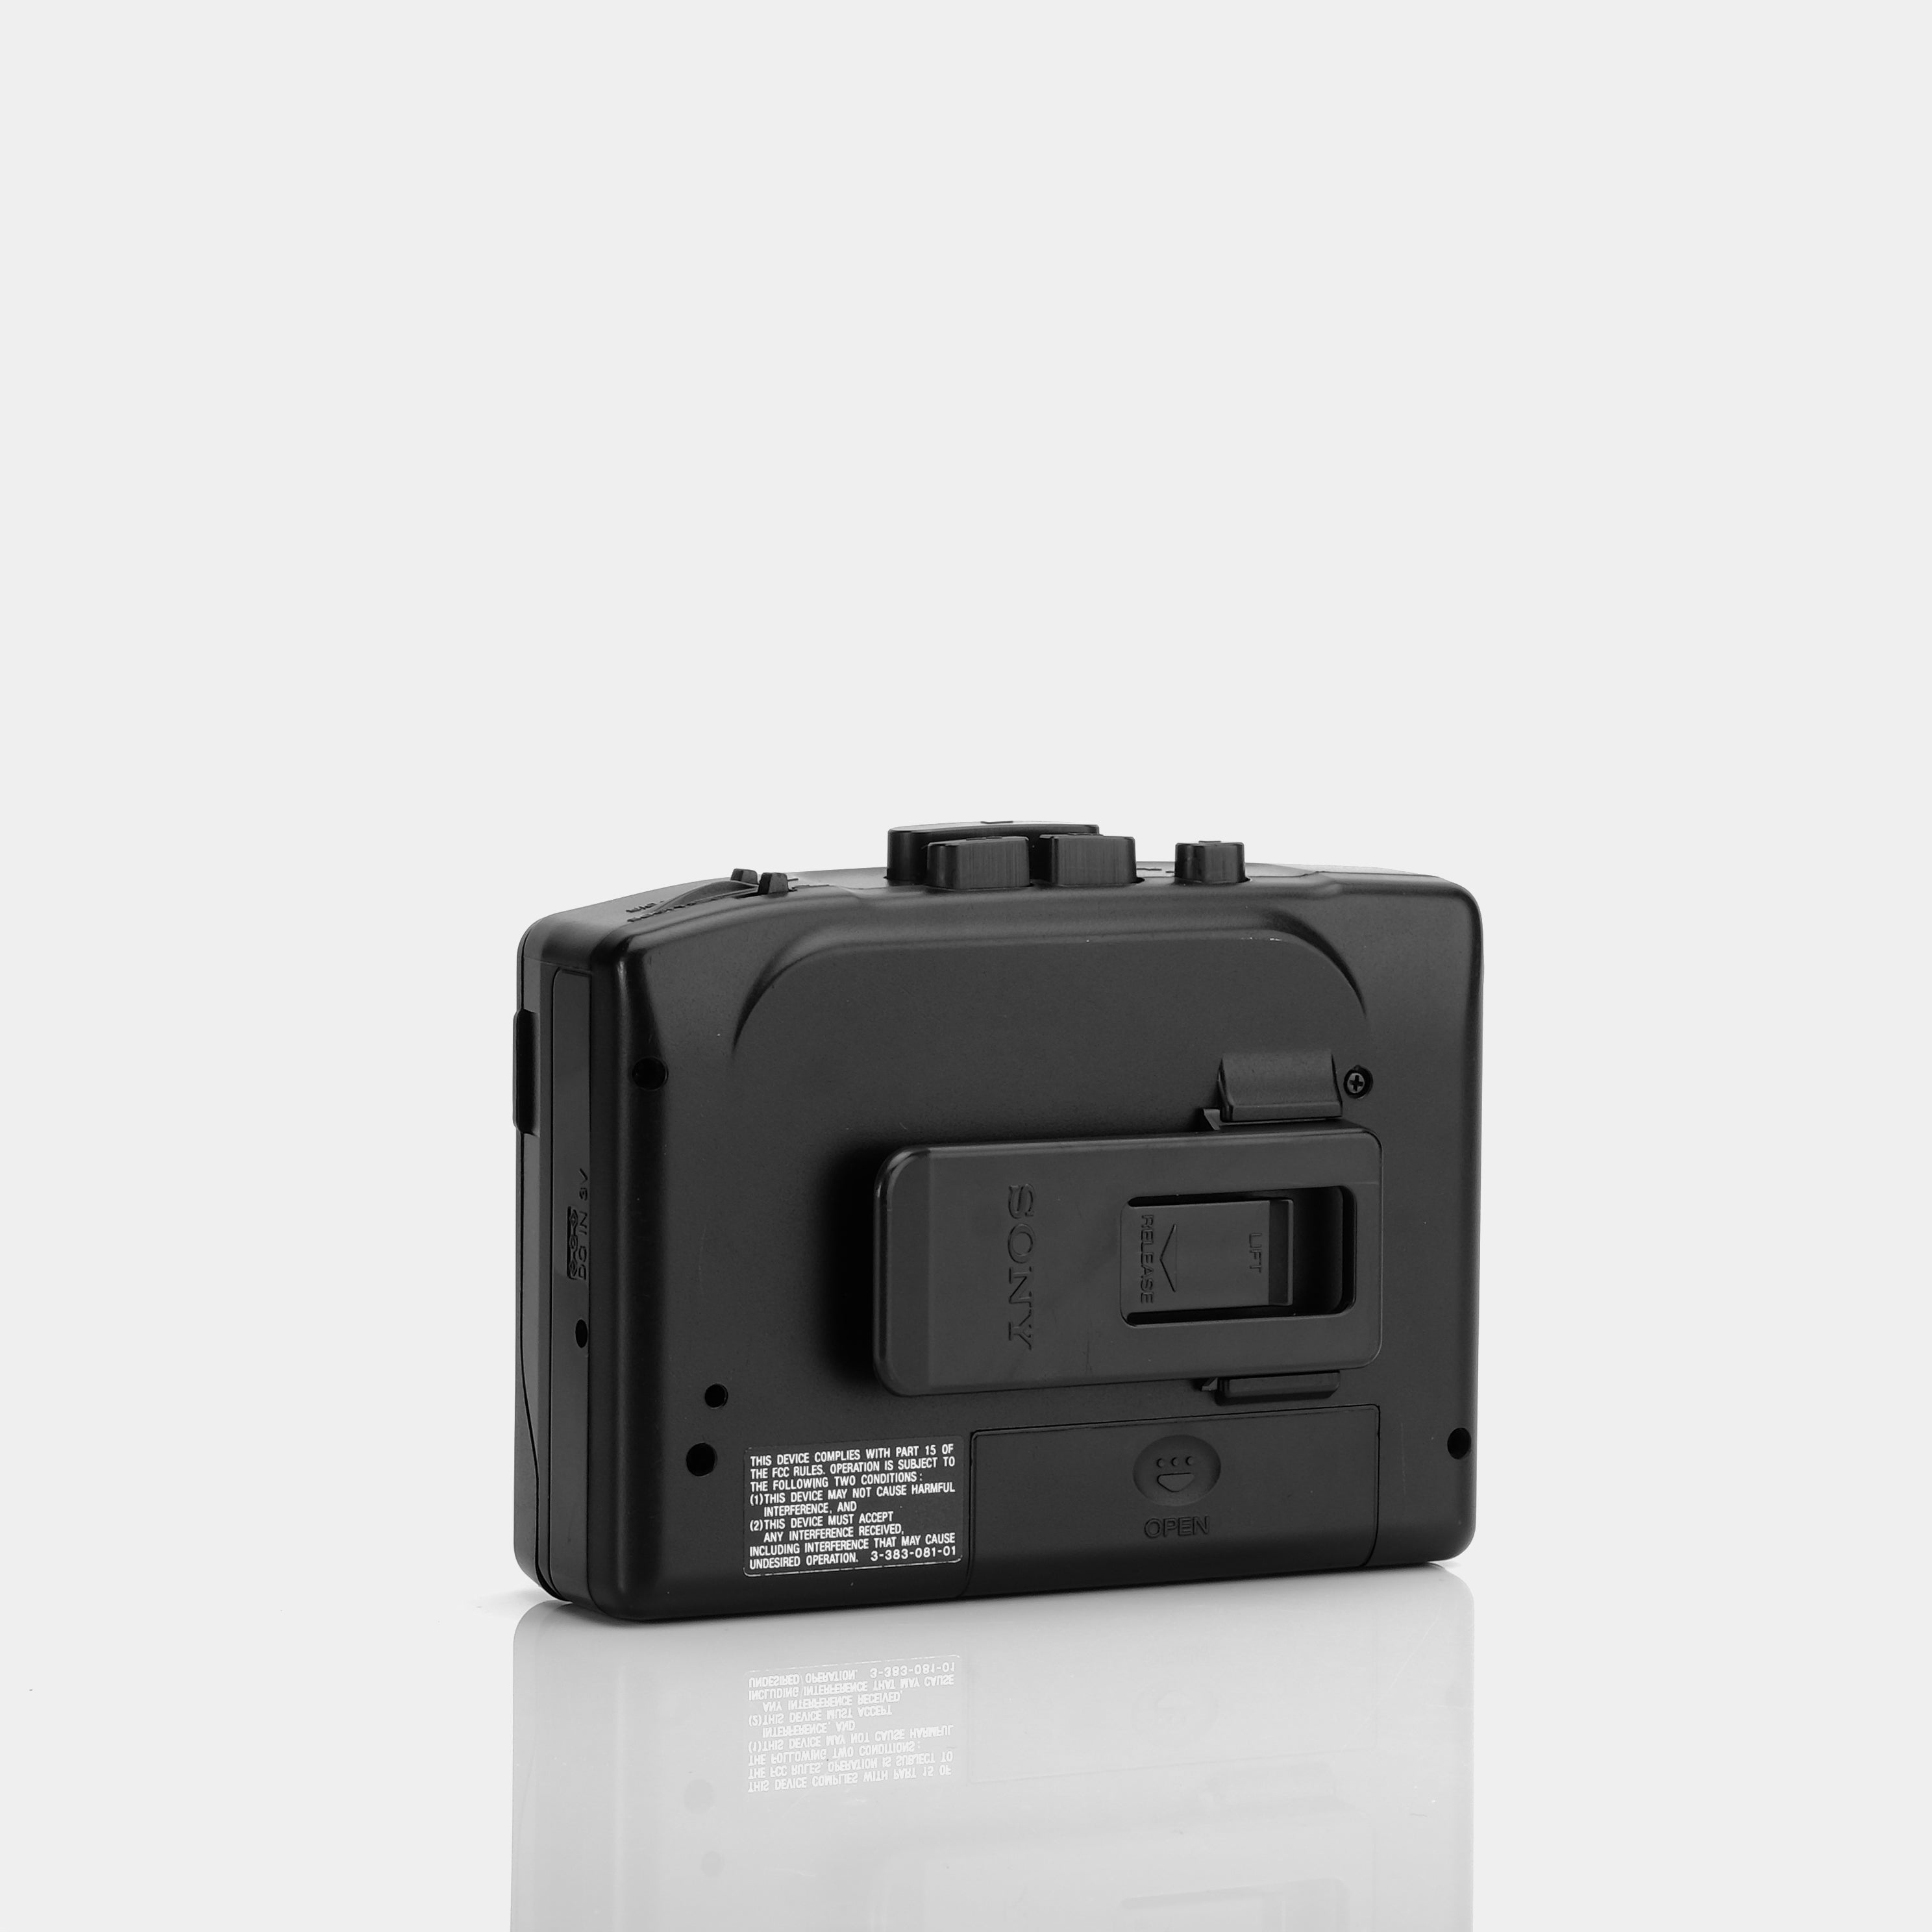 Sony Walkman WM-FX42 Auto Reverse AM/FM Portable Cassette Player